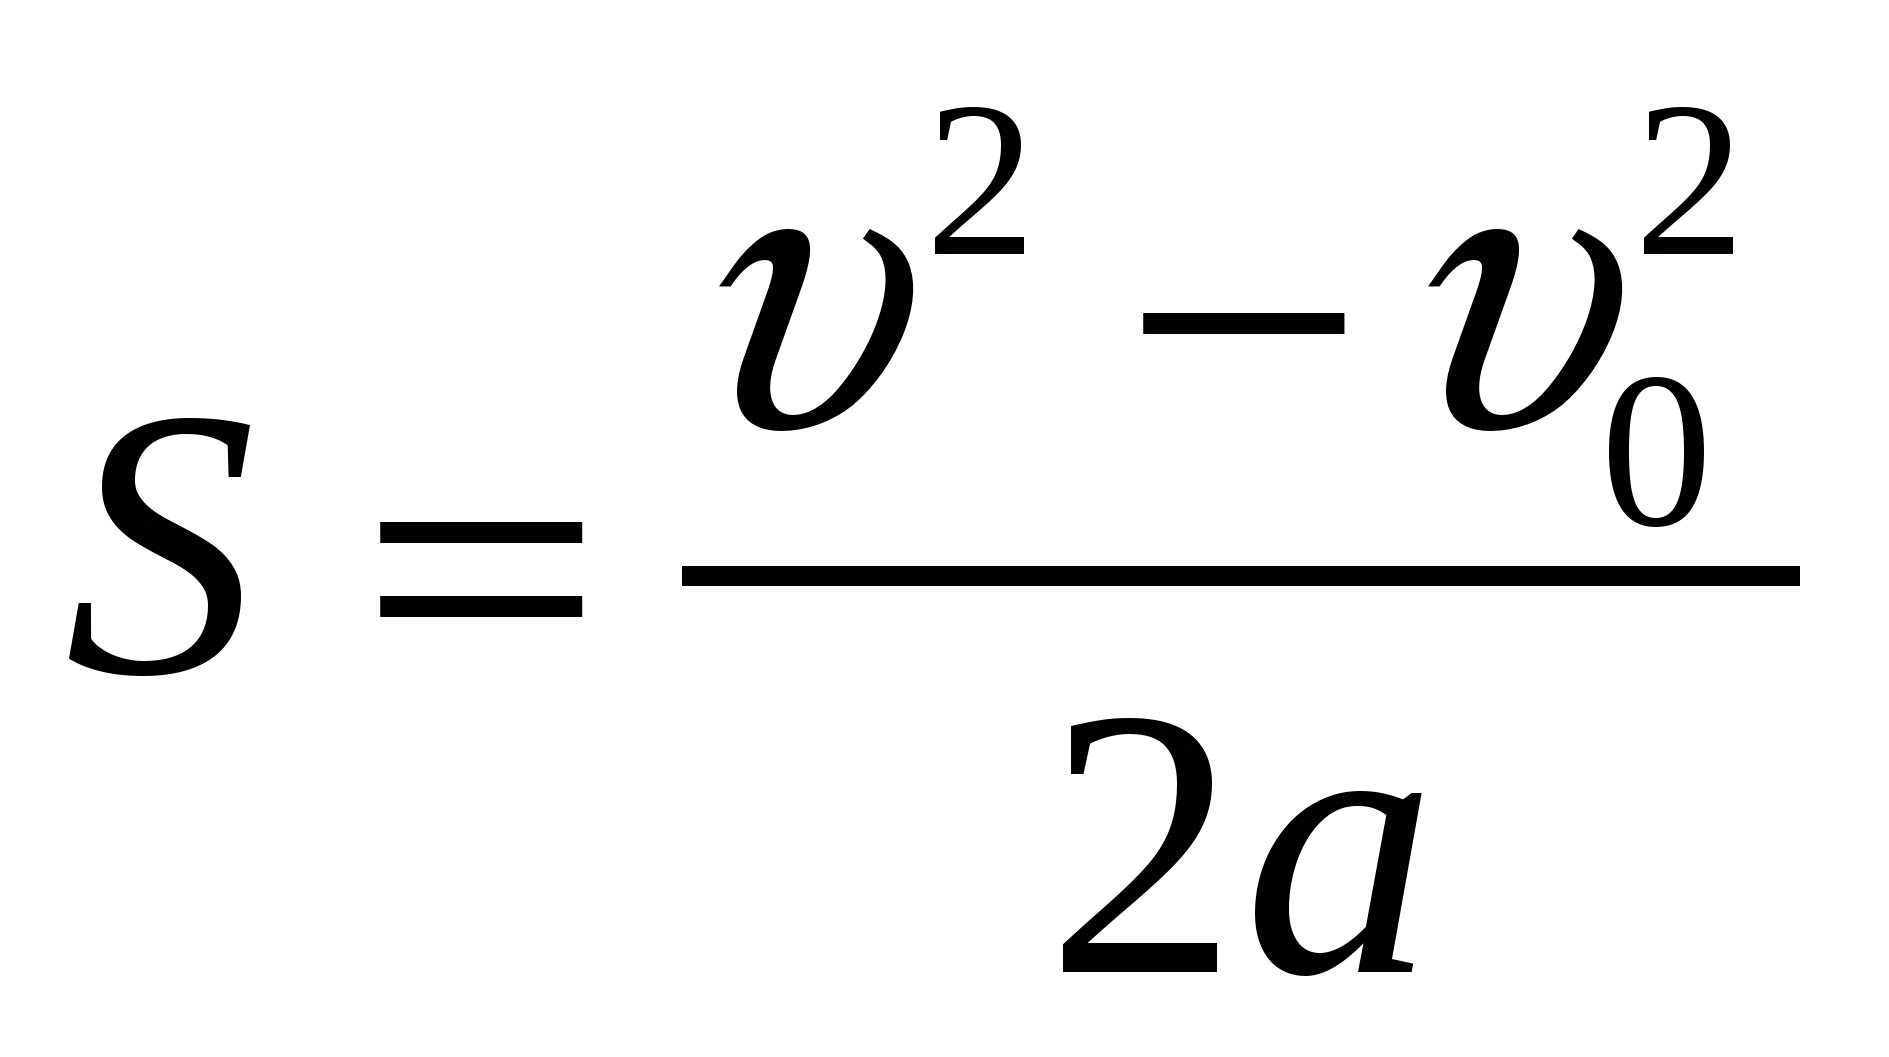 Формула спорит. S v2 v02/2a. S V 2-v0 2/2a. V2-v2/2a. Безвременная формула перемещения.